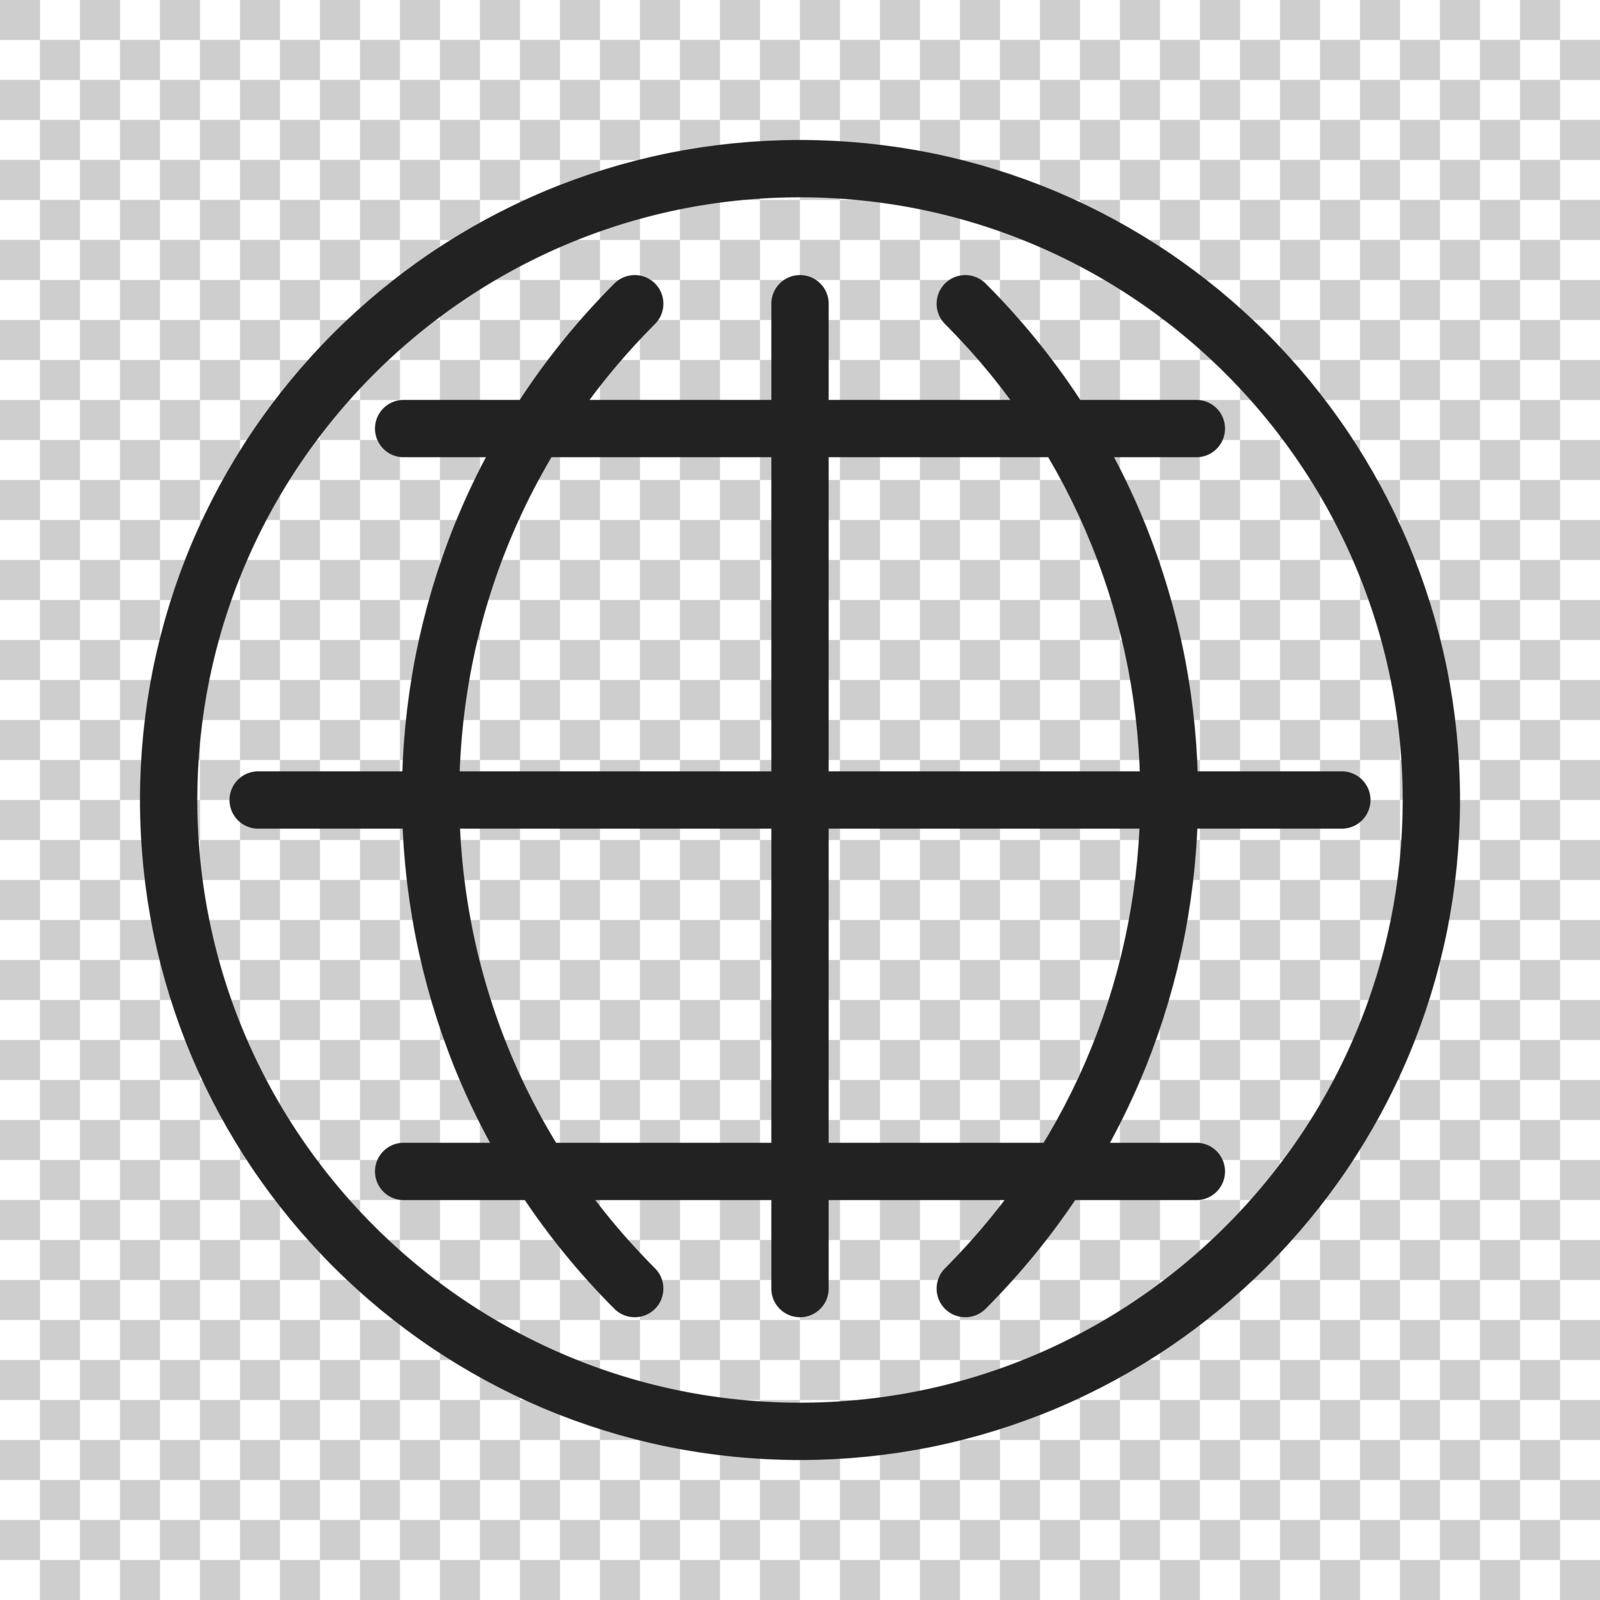 Choose or change language icon. Vector illustration on isolated transparent background. Business concept globe world communication pictogram. by LysenkoA